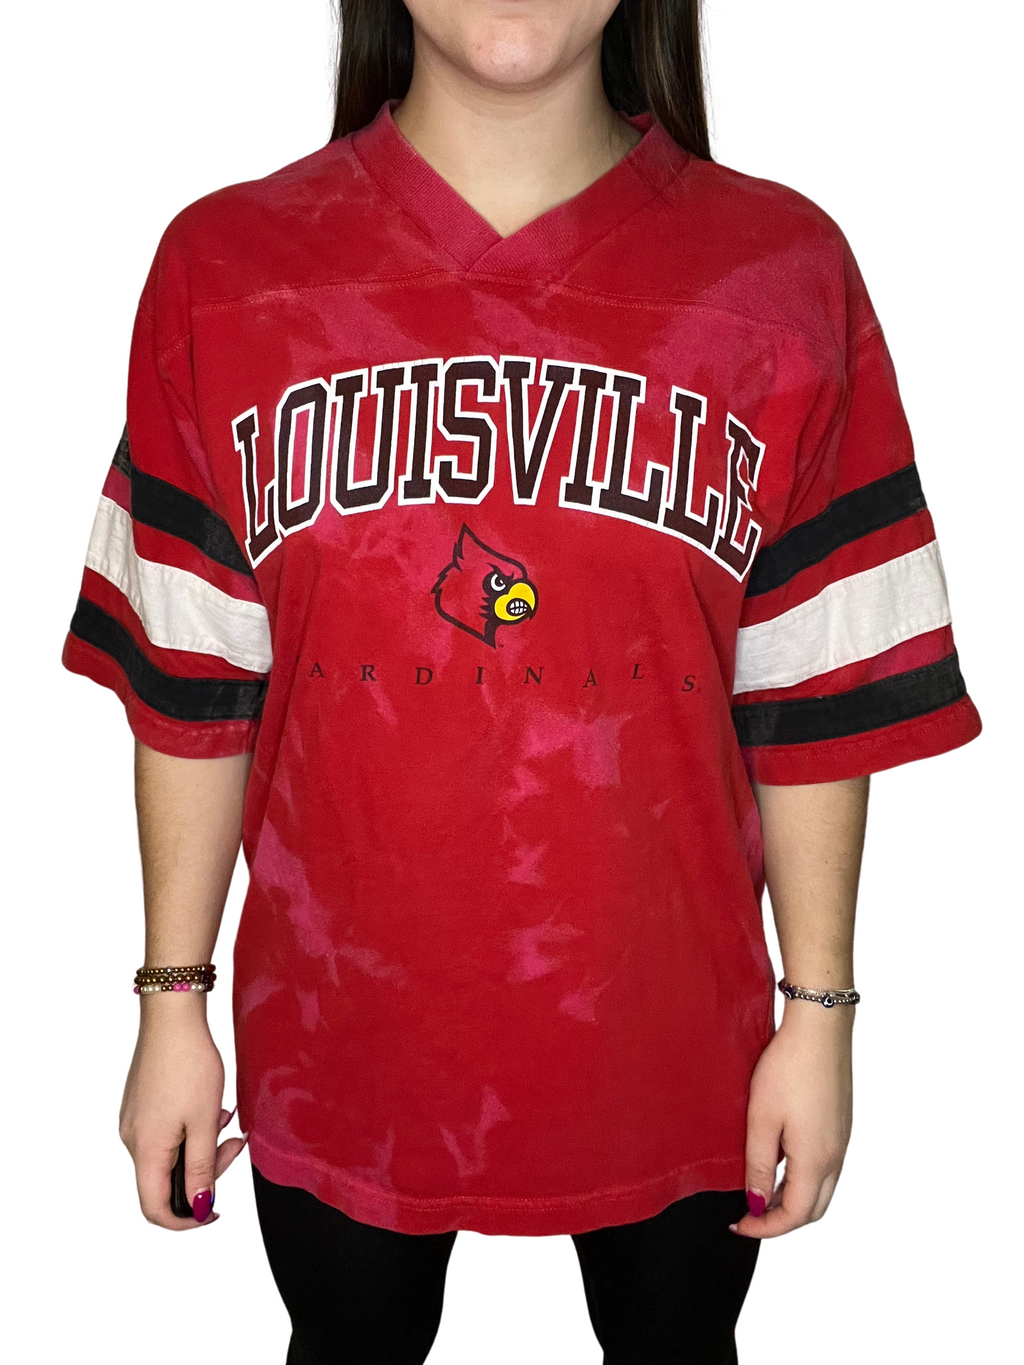 Vintage University of Louisville Bleached Shirt